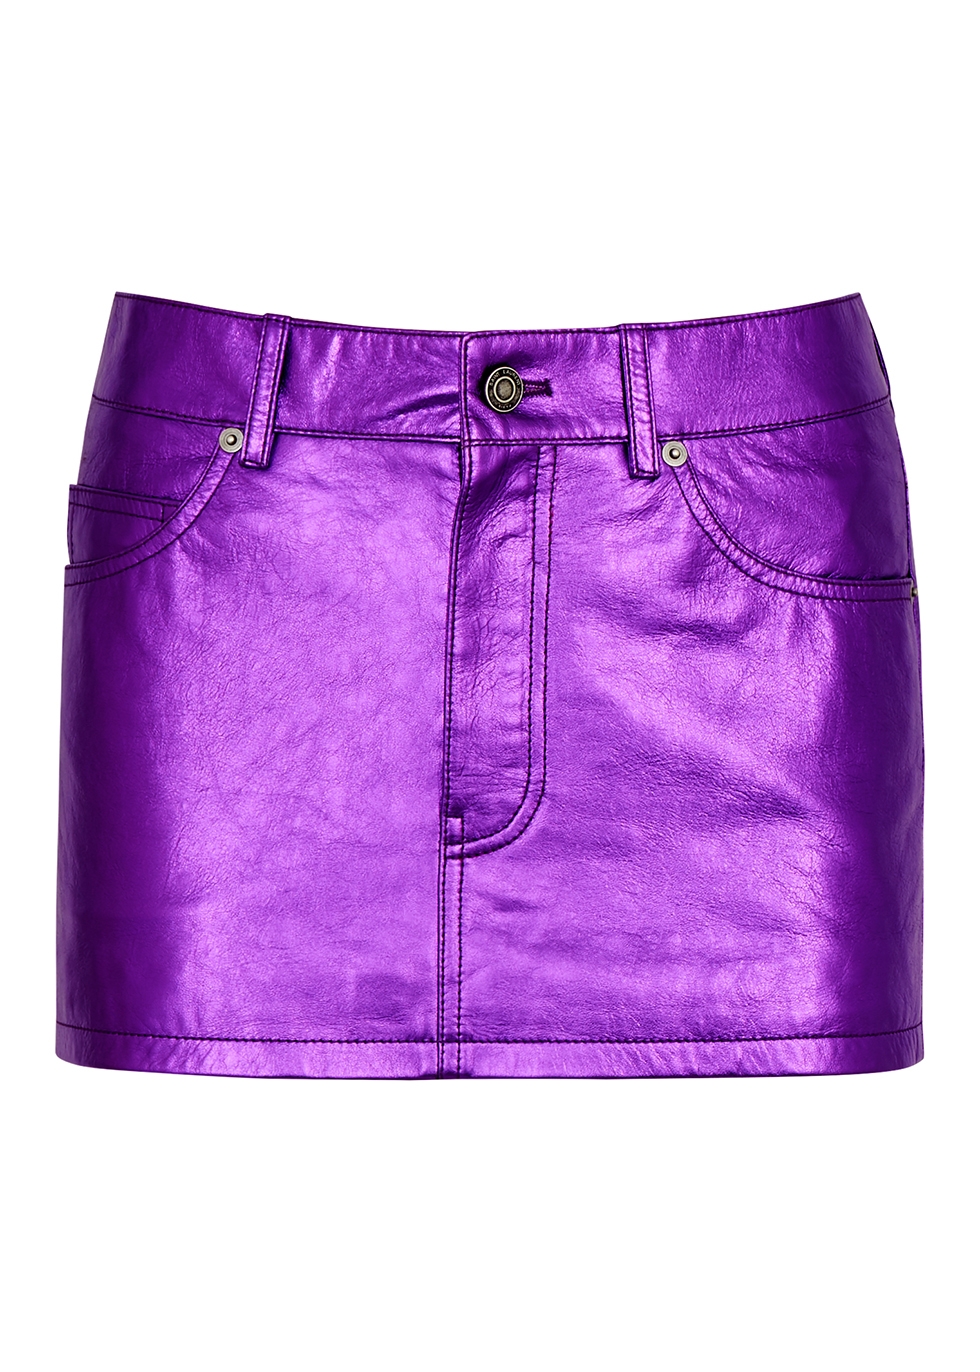 metallic lilac skirt